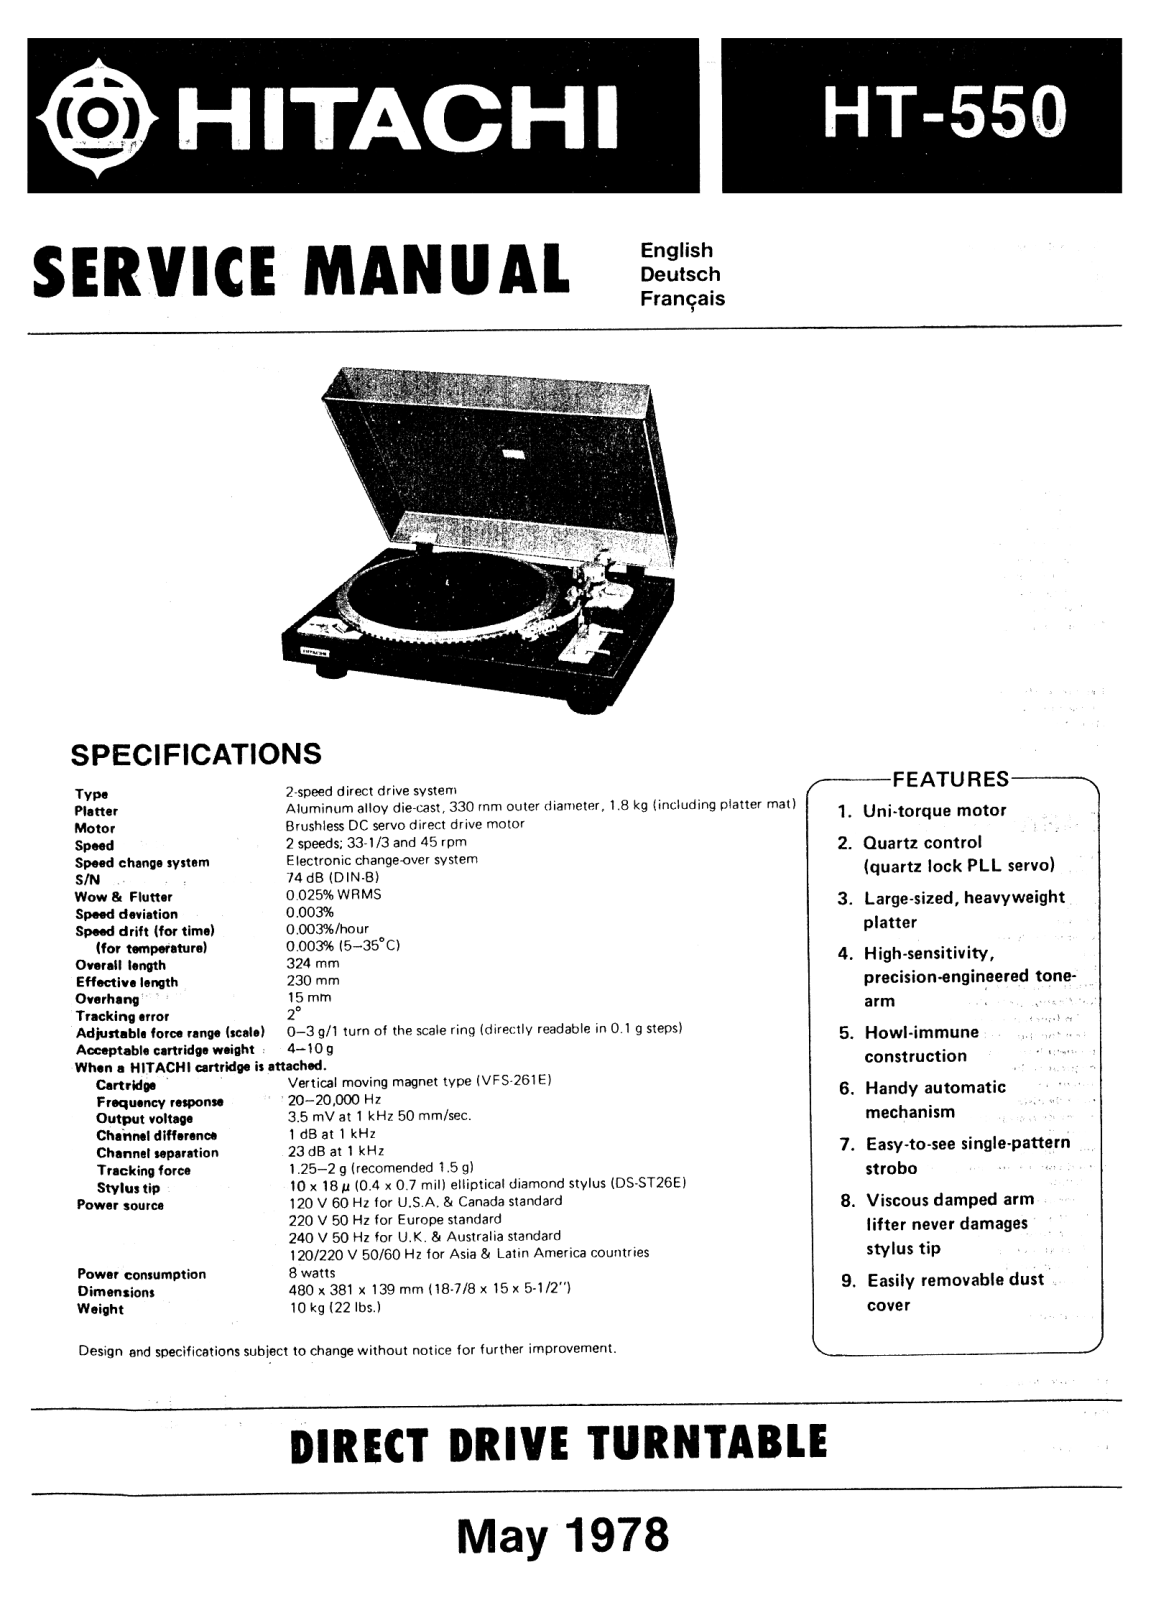 Hitachi HT-550 Service Manual